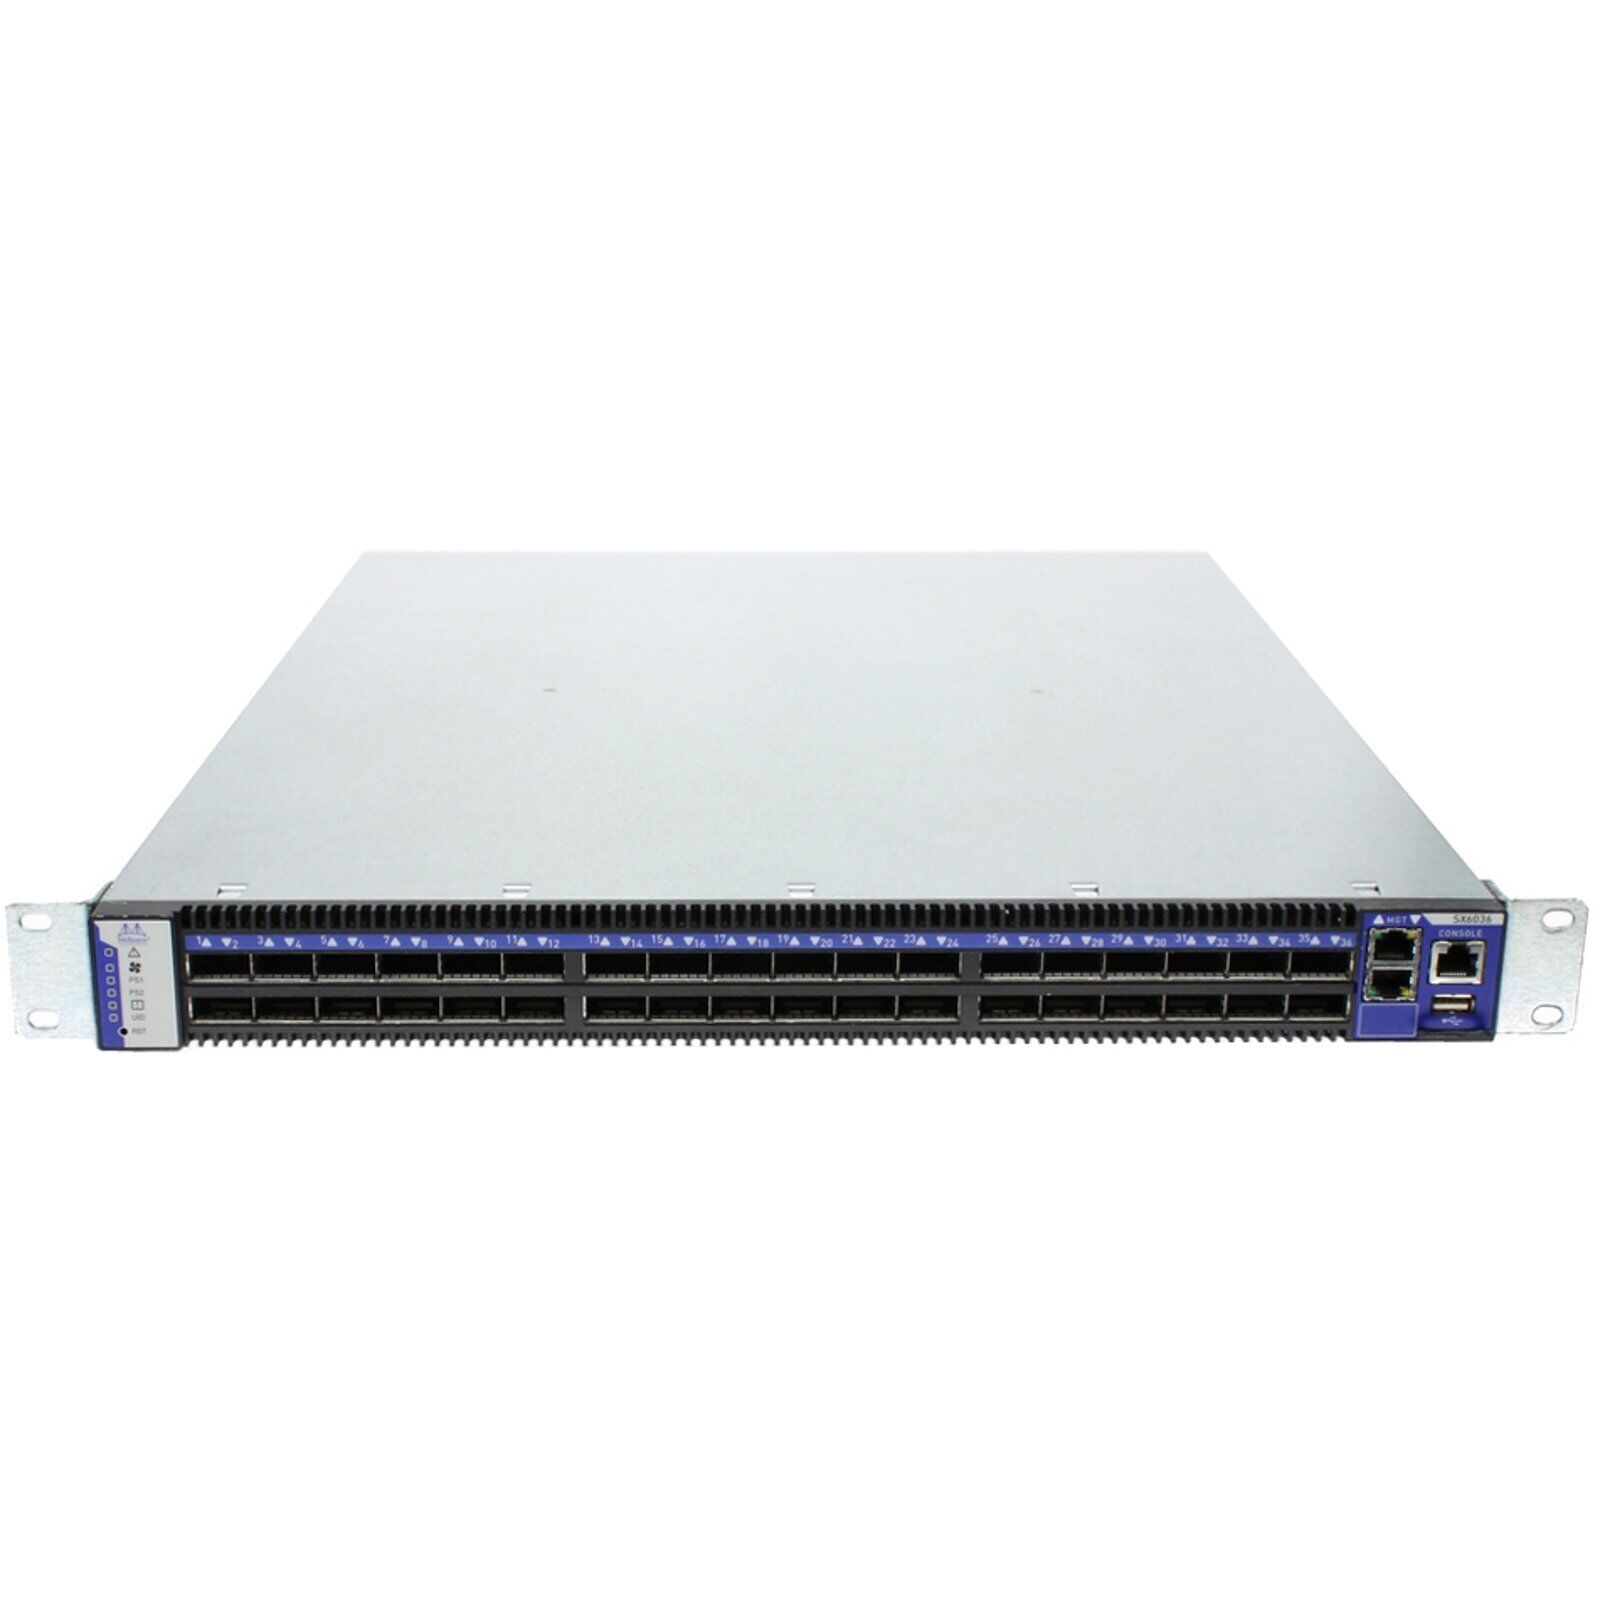 Mellanox SX6036F-1SFR 36P 56Gb/s FDR QSFP+ P2C InfiniBand Switch